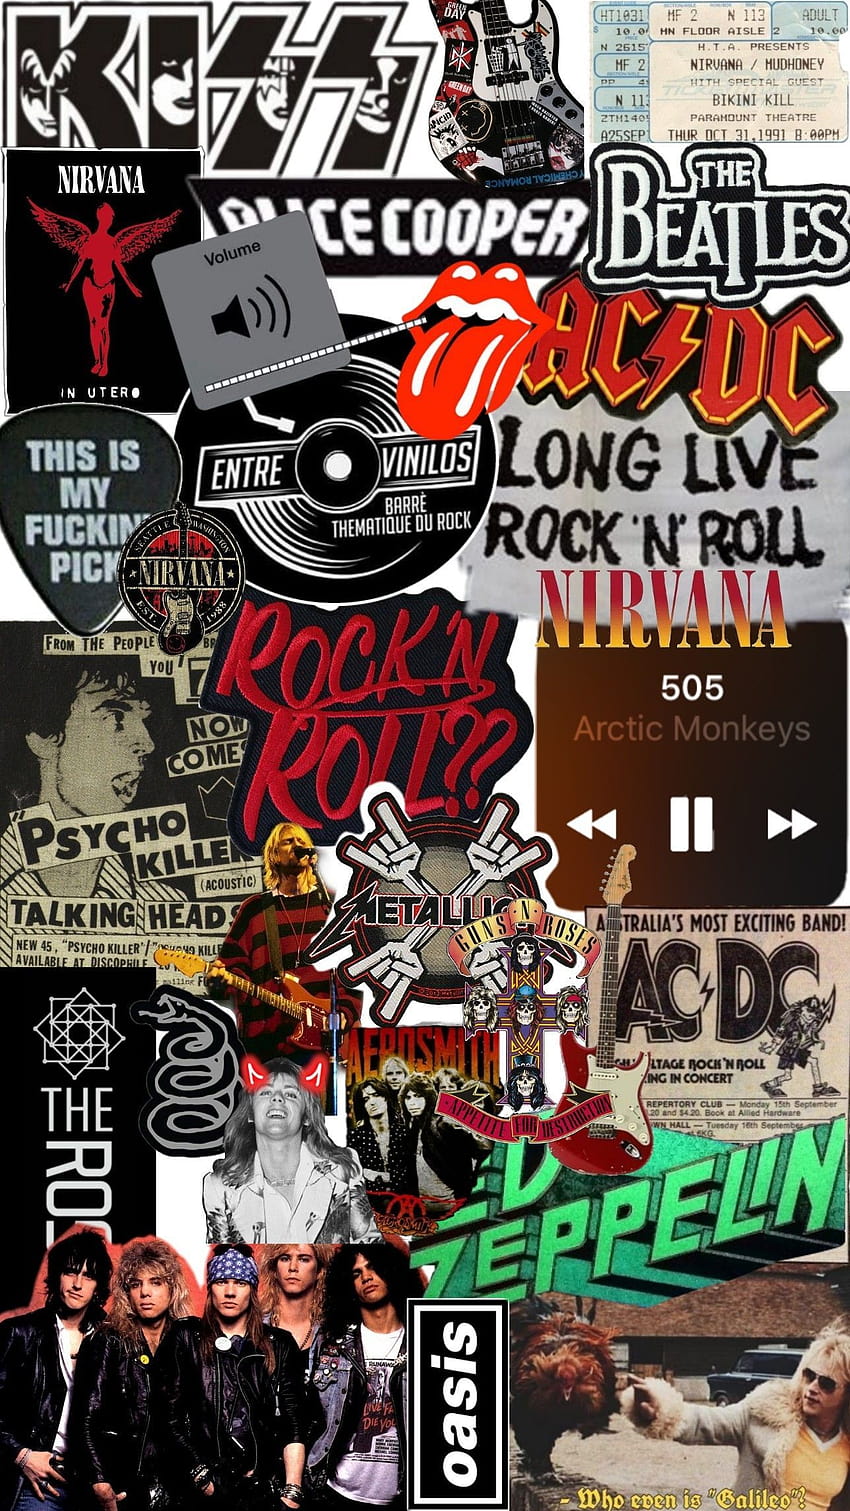 Rock n' roll, estetika rock wallpaper ponsel HD